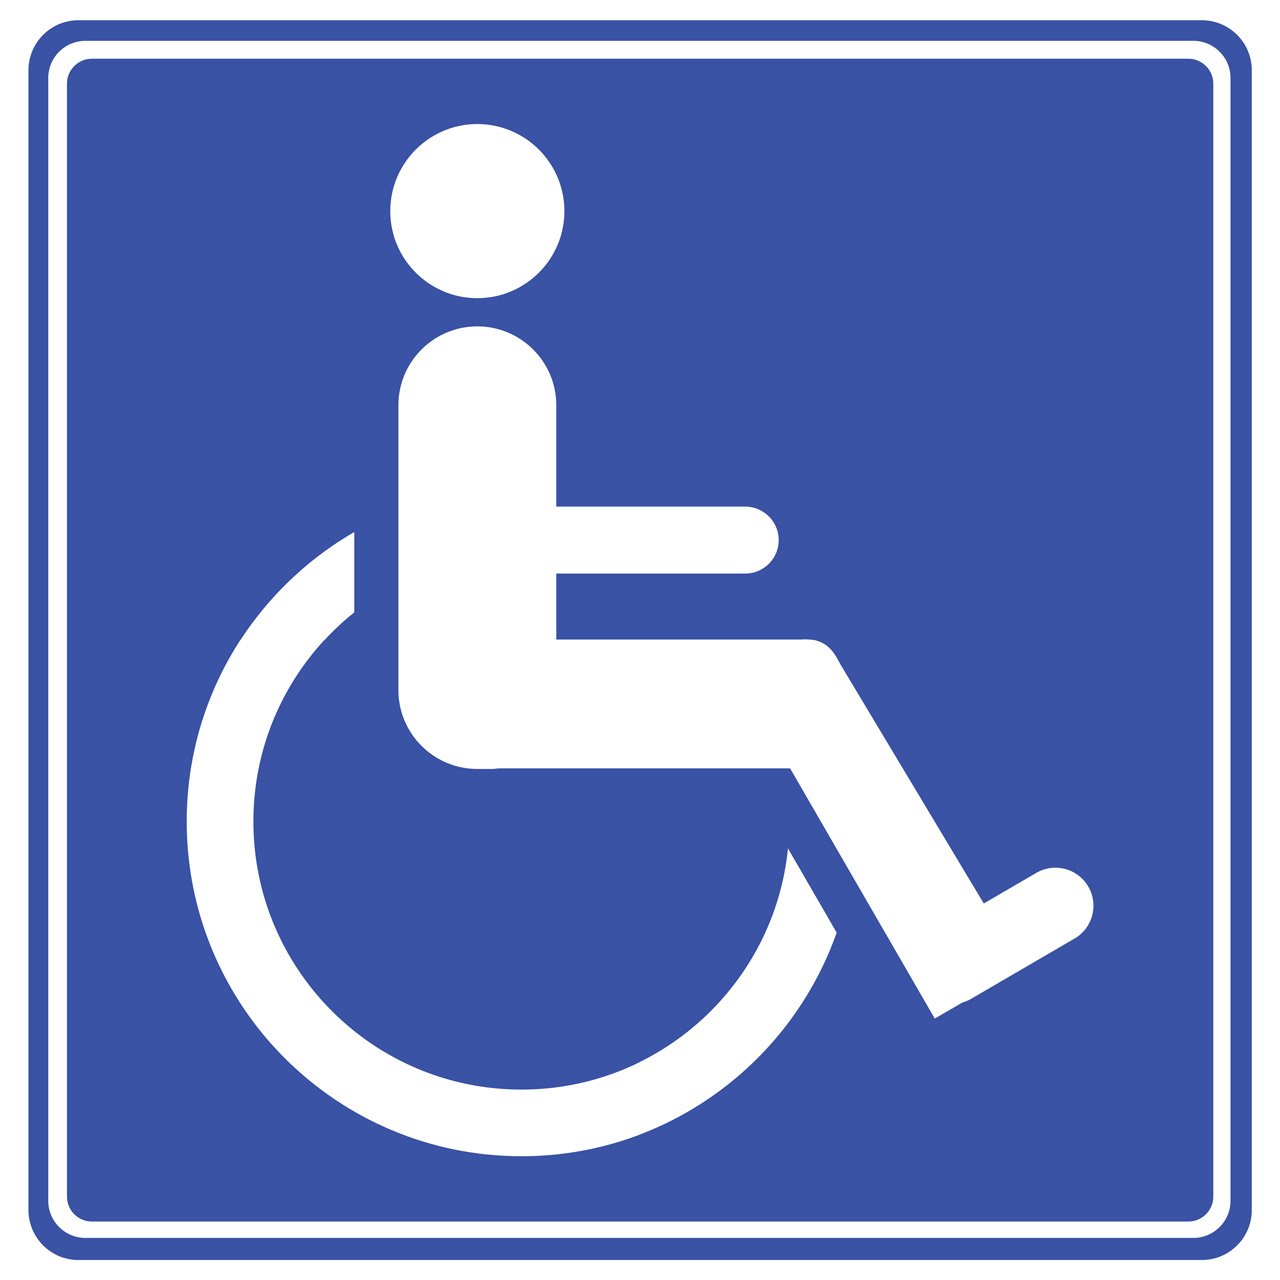 The Wheelchair Symbol